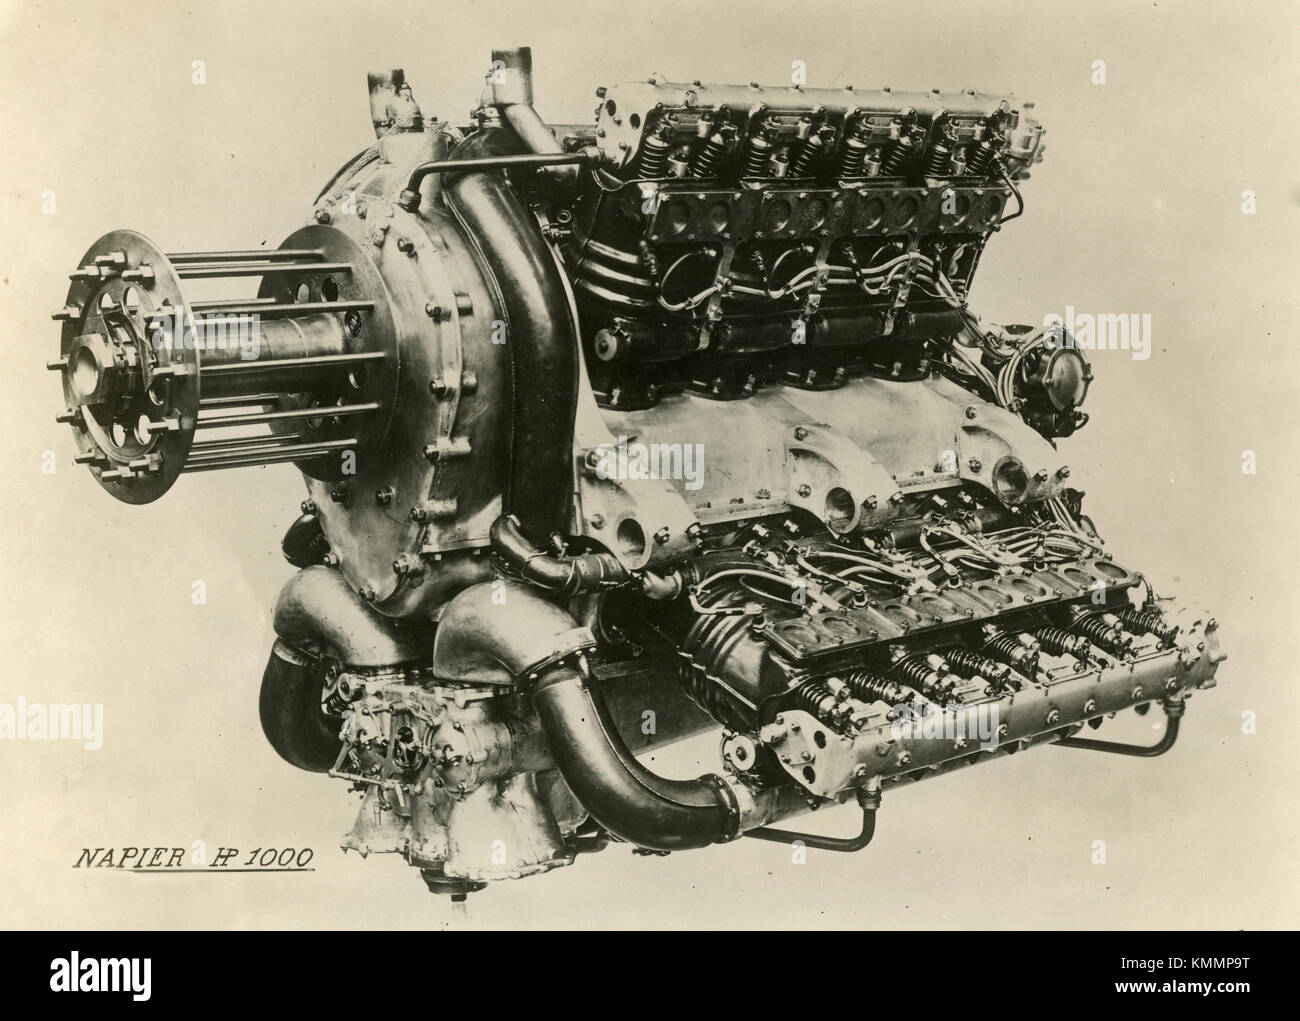 Aircraft engine Napier HP 1000, France 1920s Stock Photo